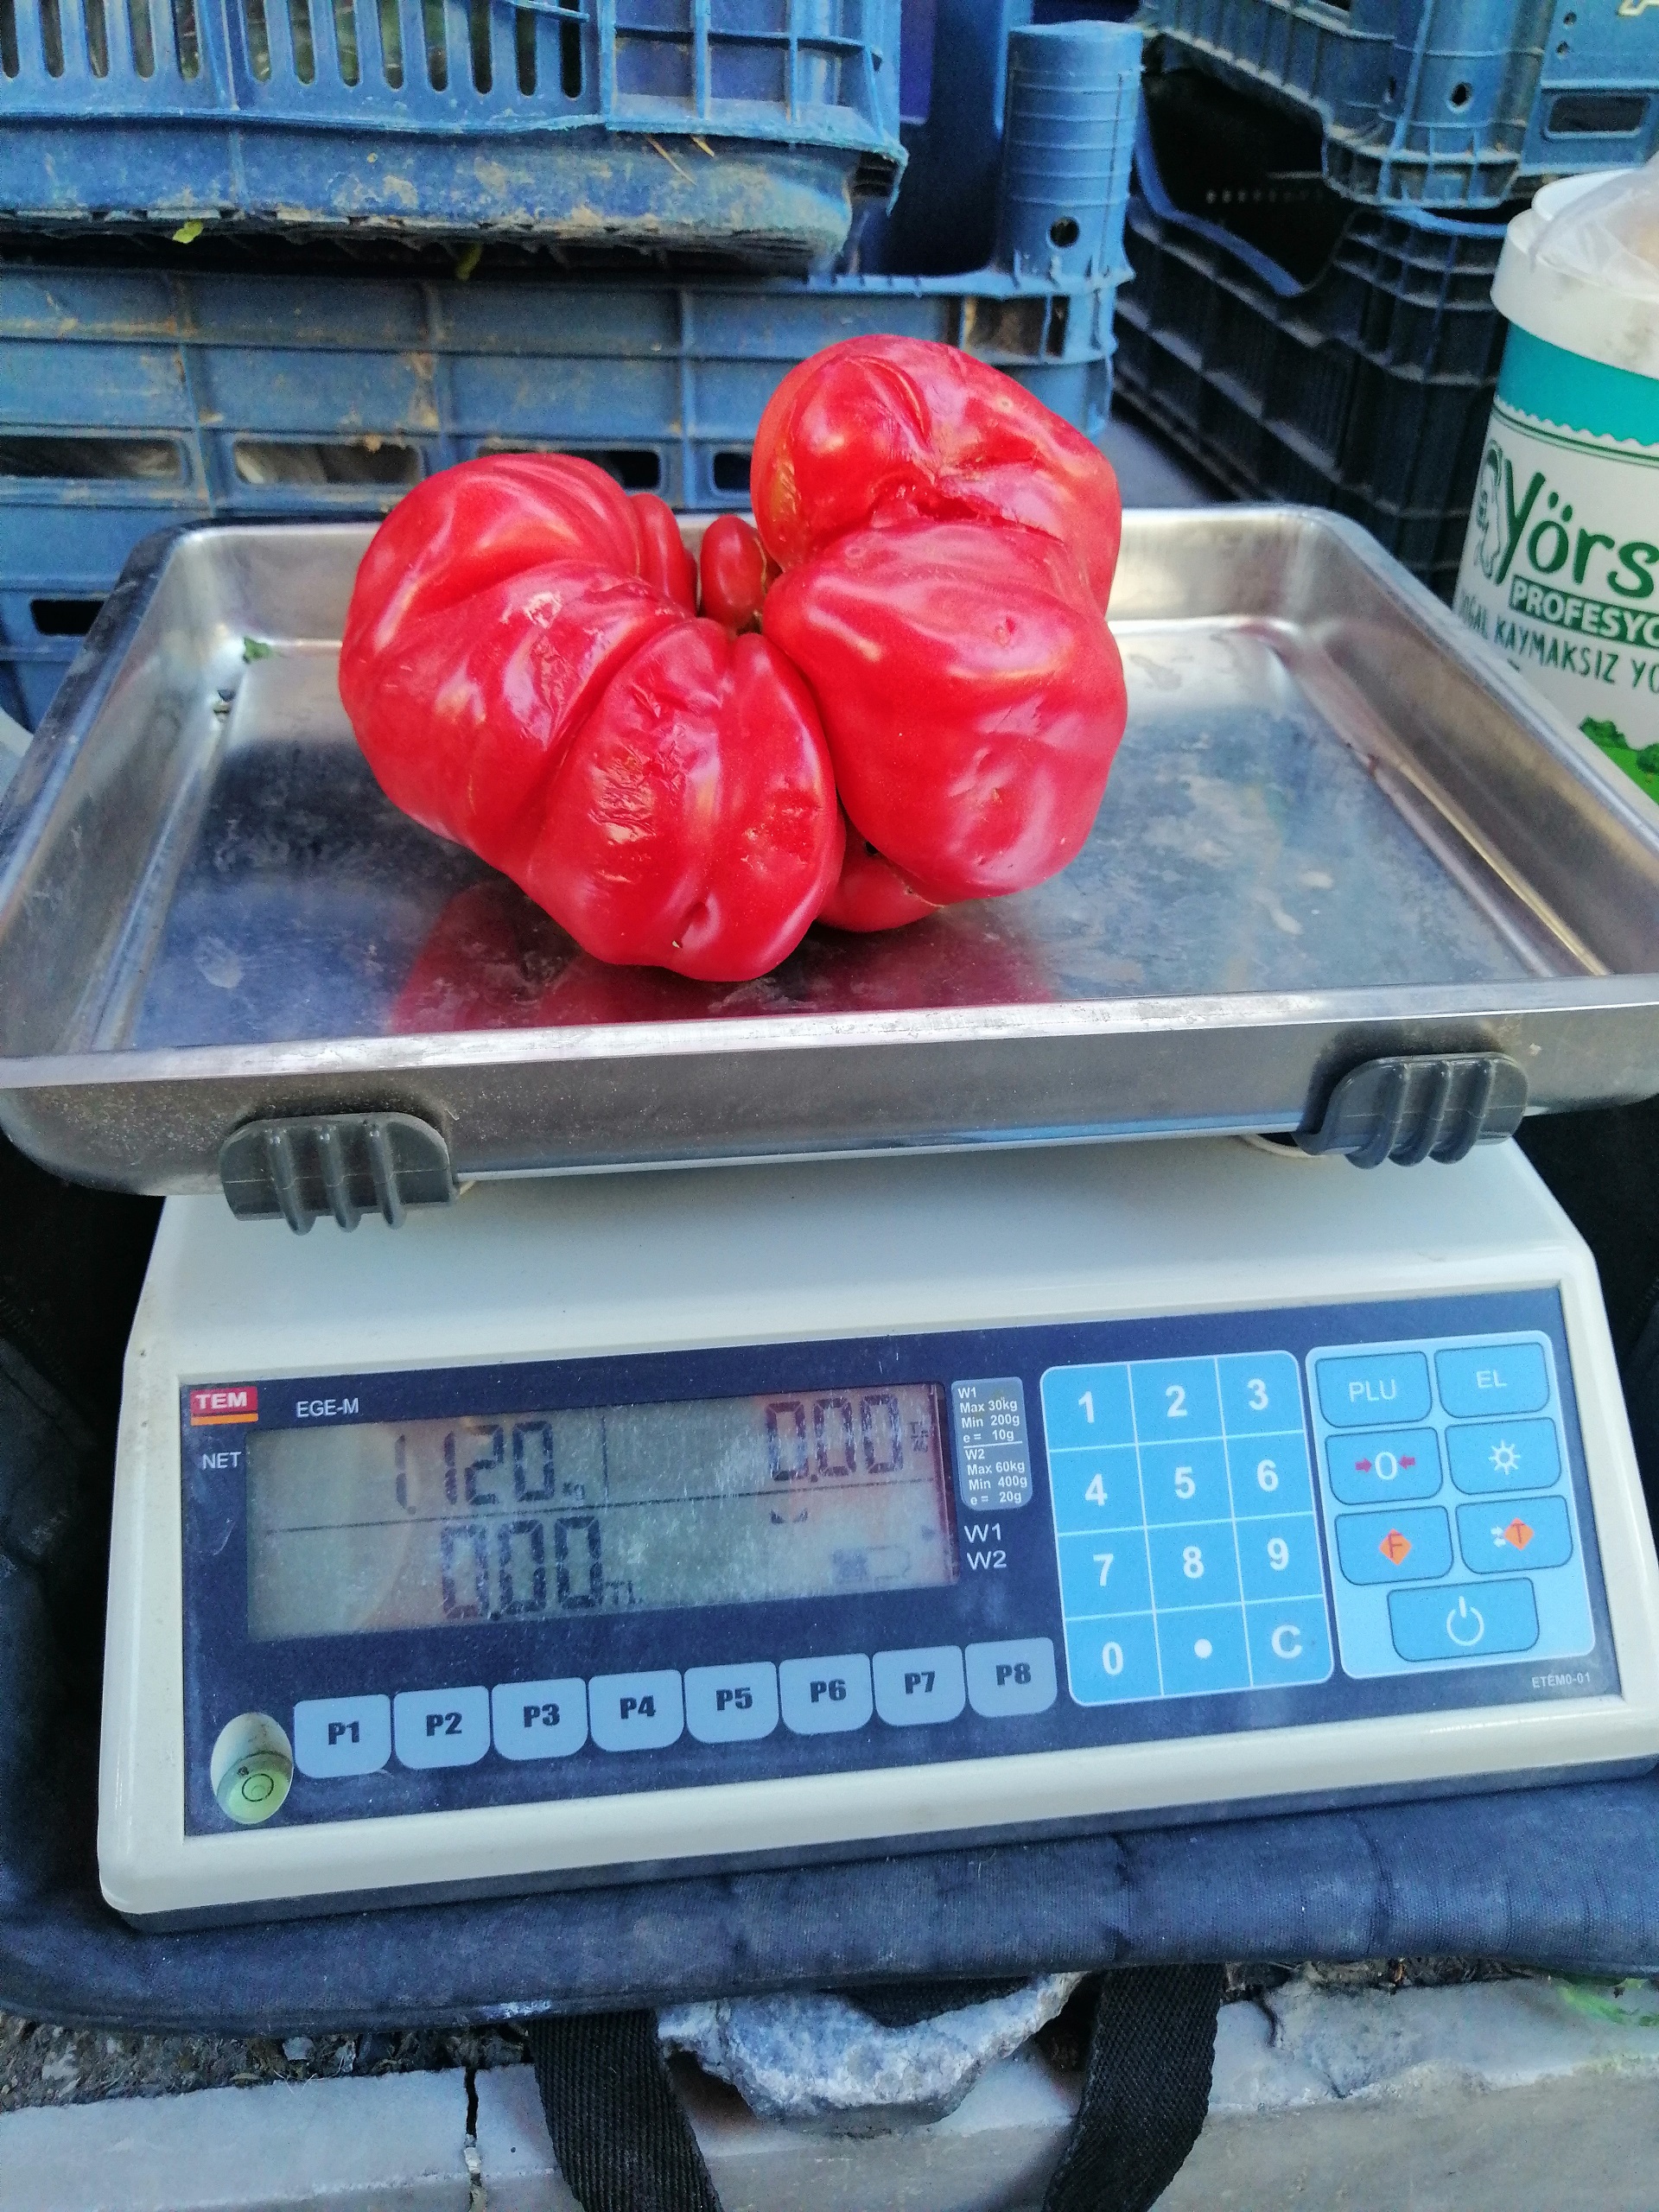 canakkalede-yetisen-1-kilo-120-gramlik-domates-buyukluguyle-sasirtti-4962-dhaphoto8.jpg